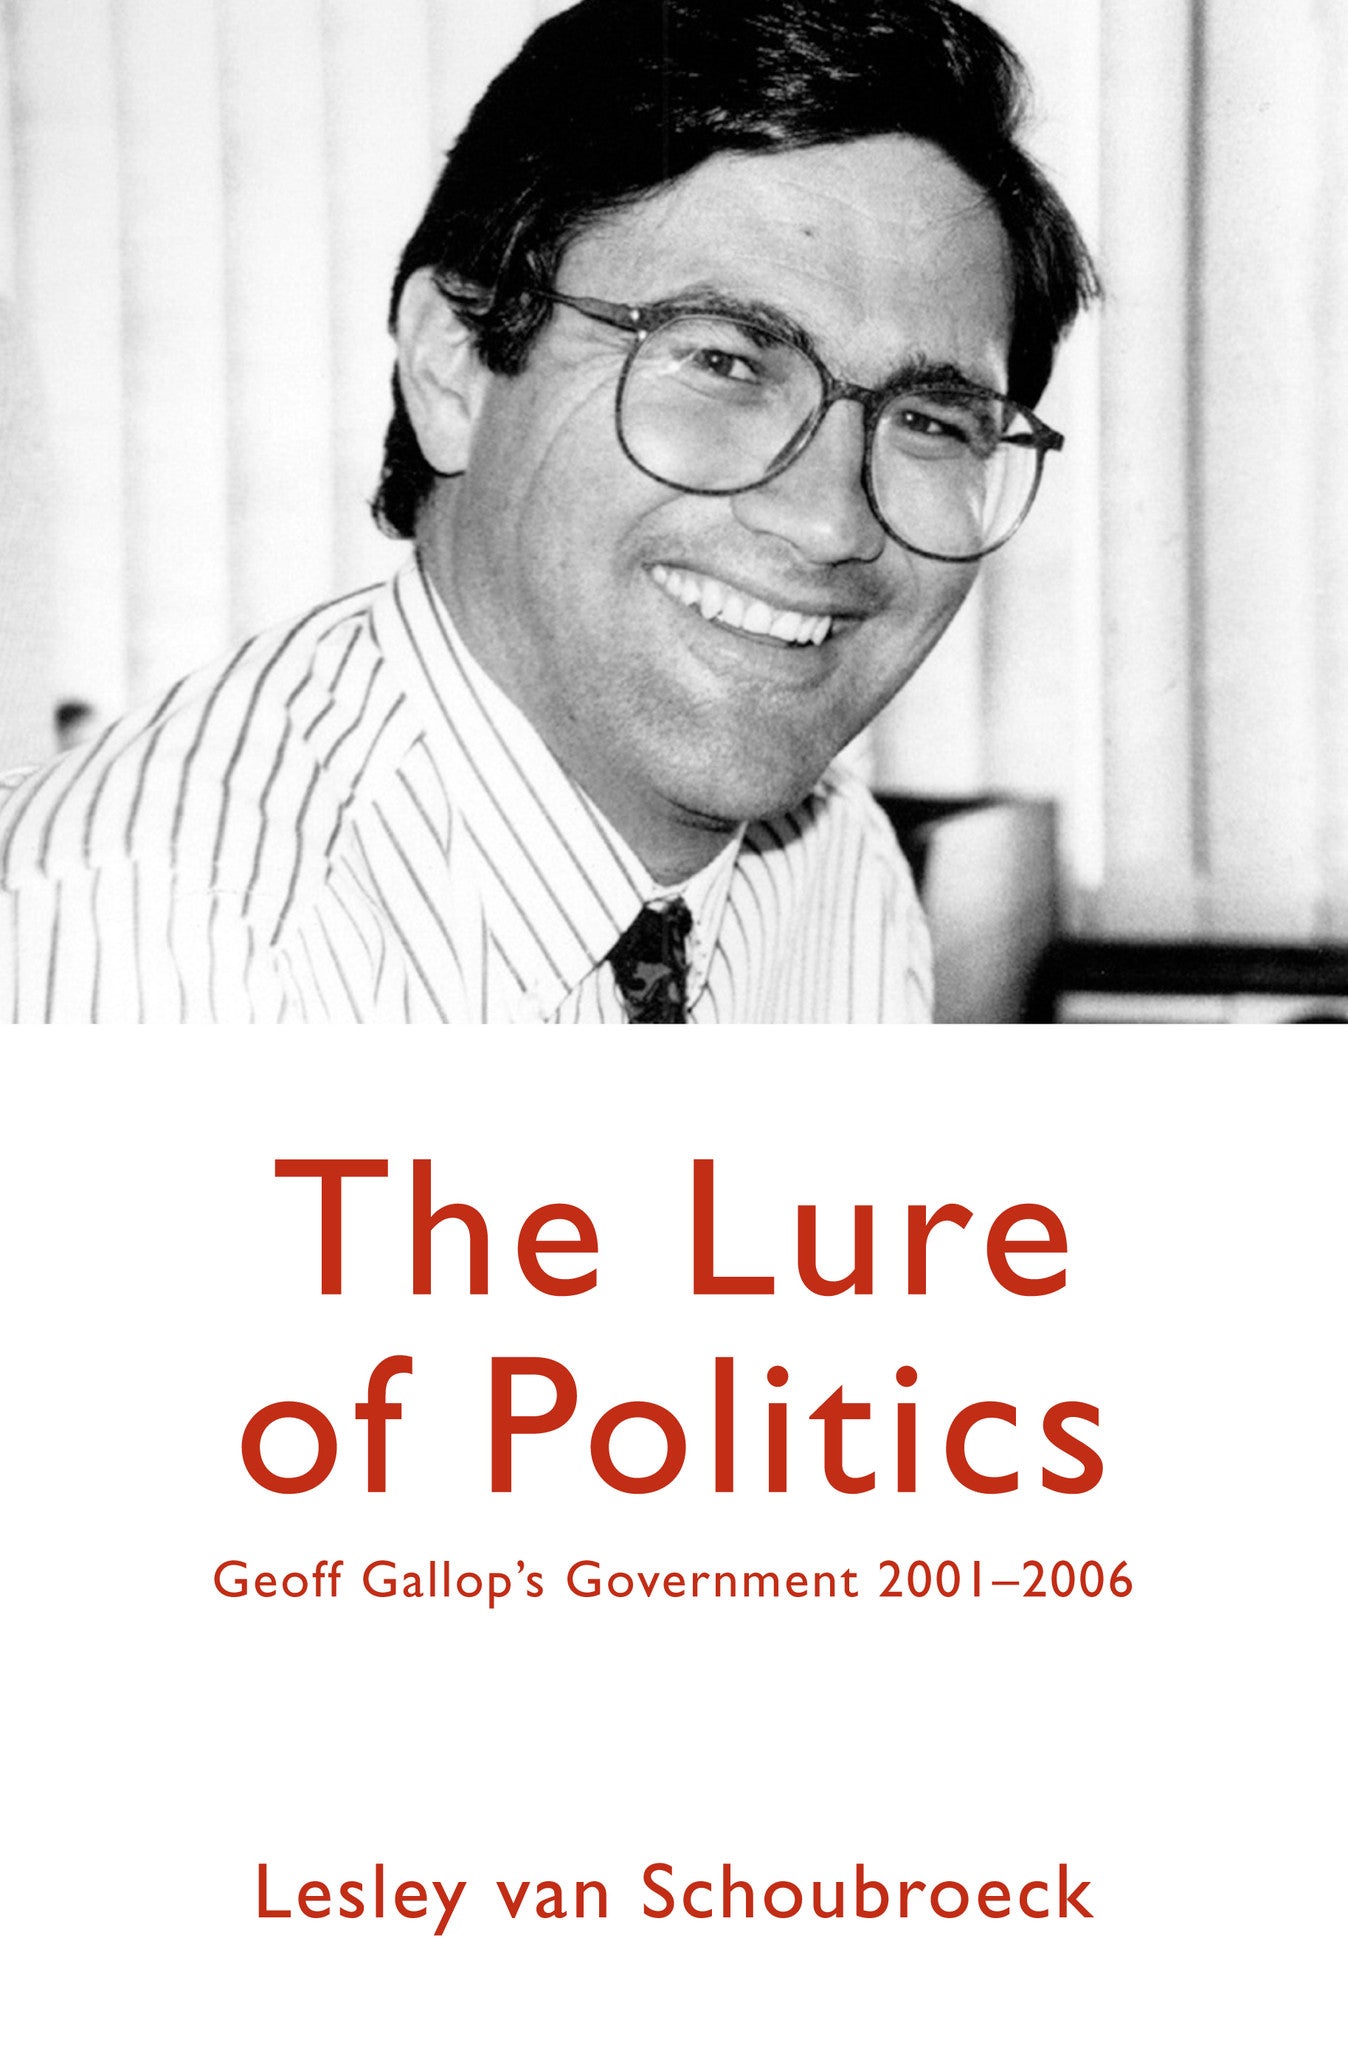 The Lure of Politics: Geoff Gallop's Government 2001-2006